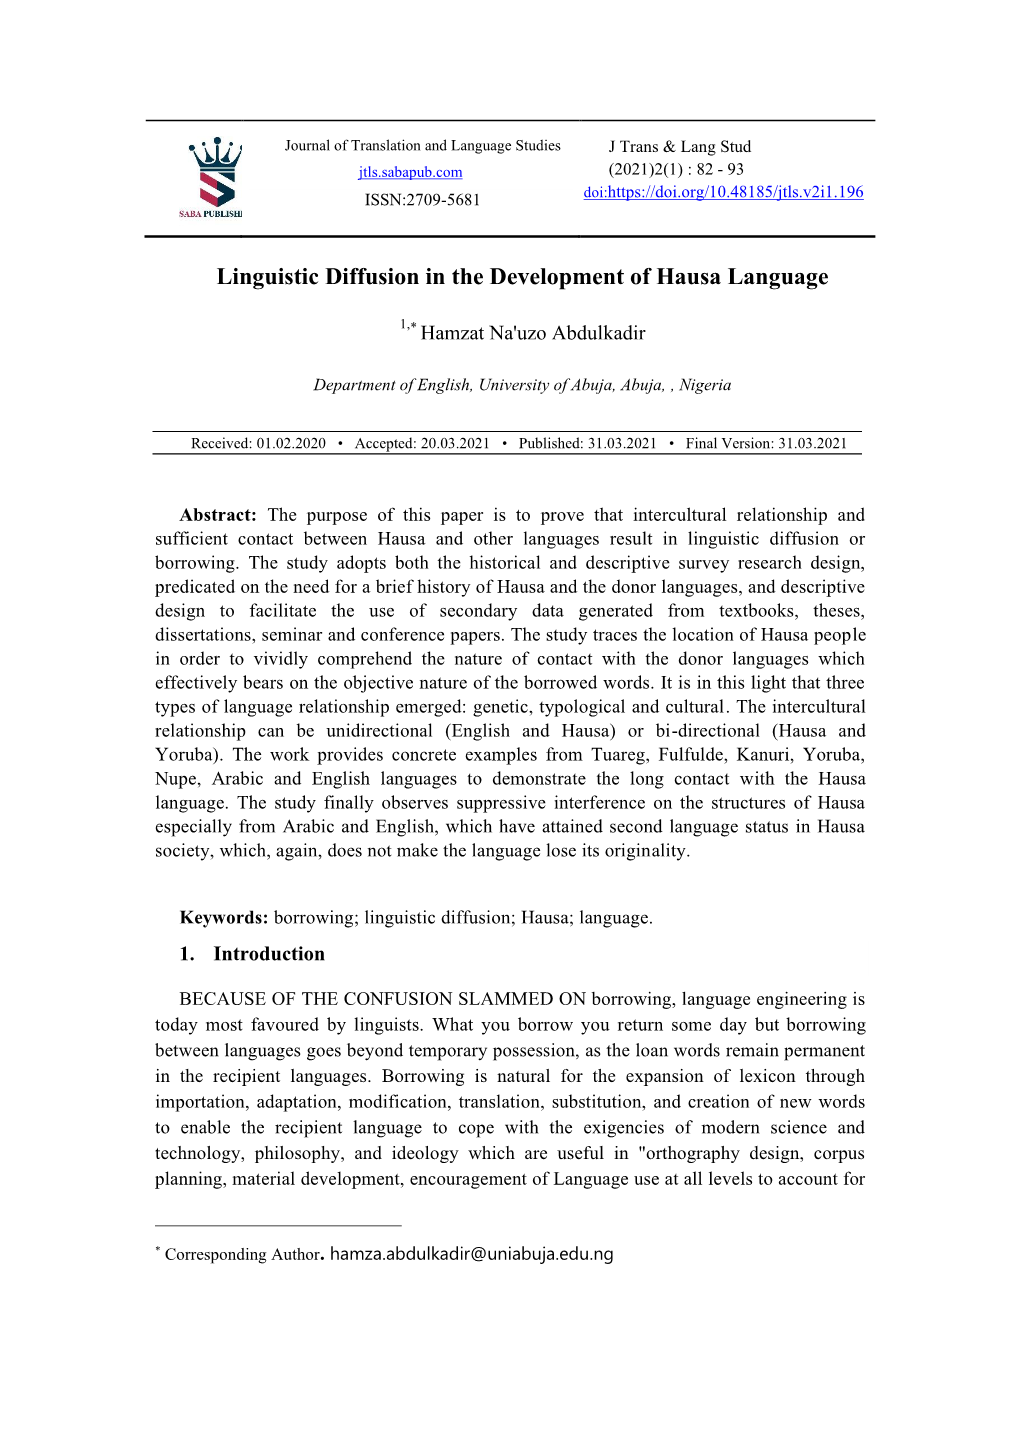 Linguistic Diffusion in the Development of Hausa Language